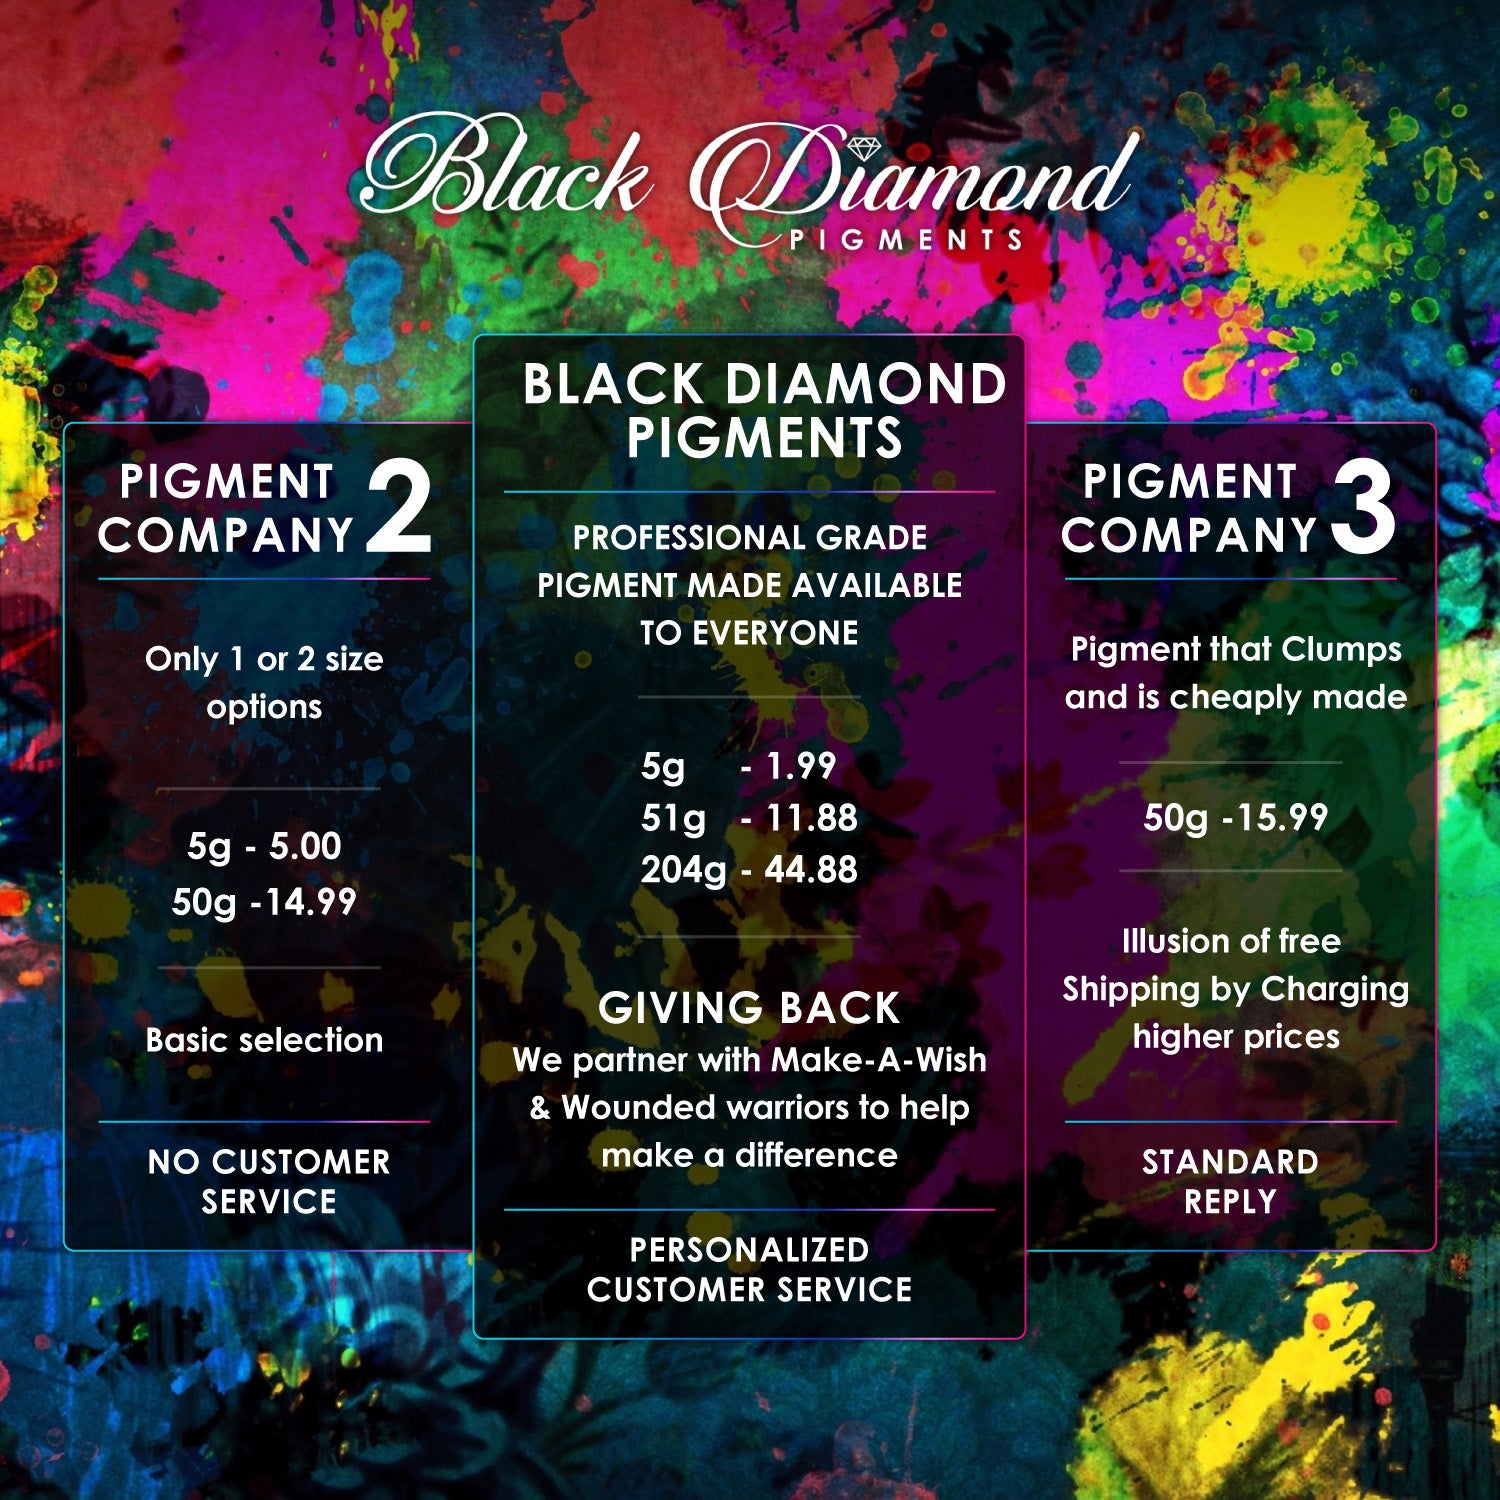 "SAVAGE" Black Diamond Pigments